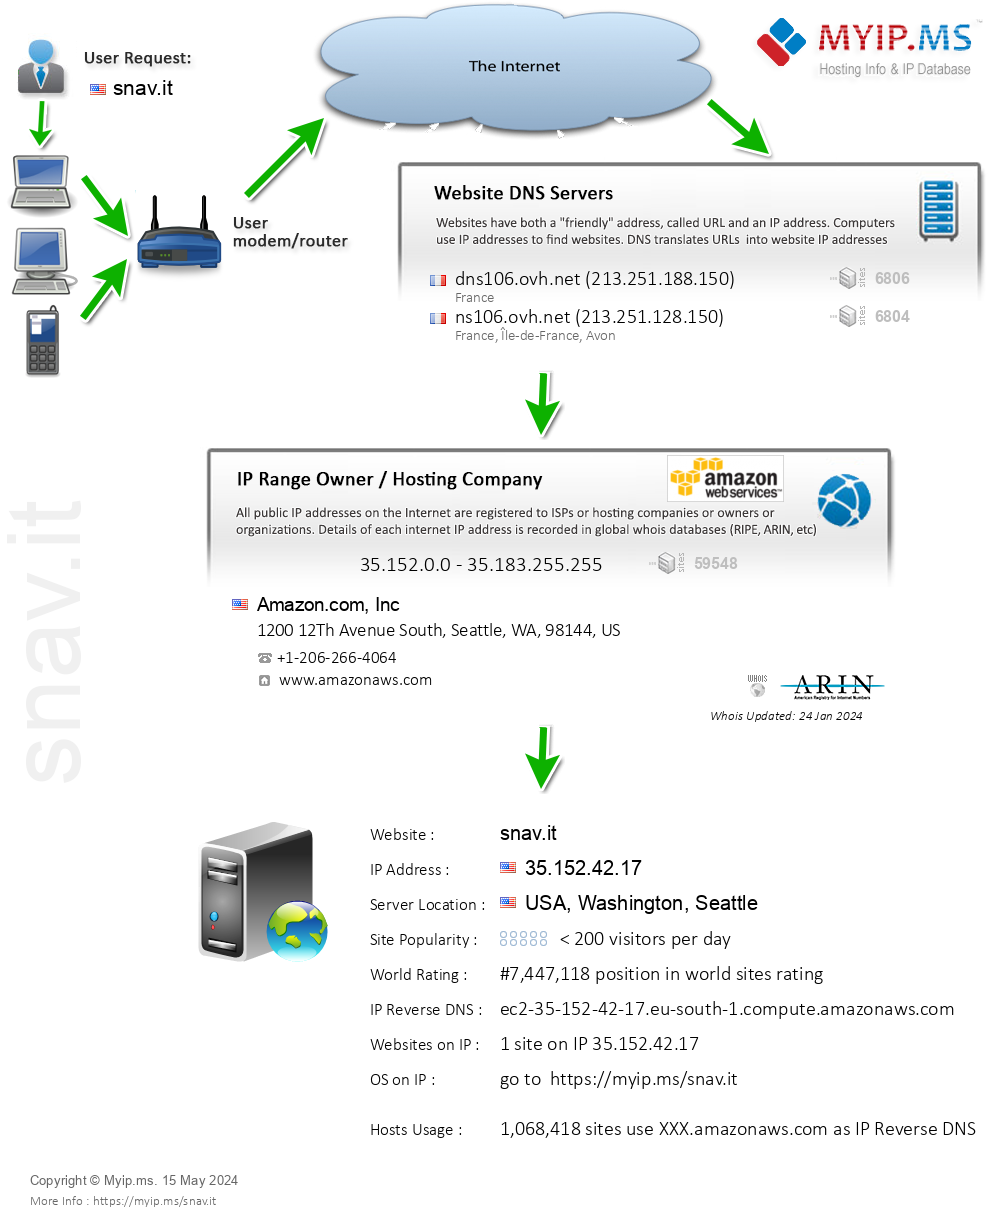 Snav.it - Website Hosting Visual IP Diagram